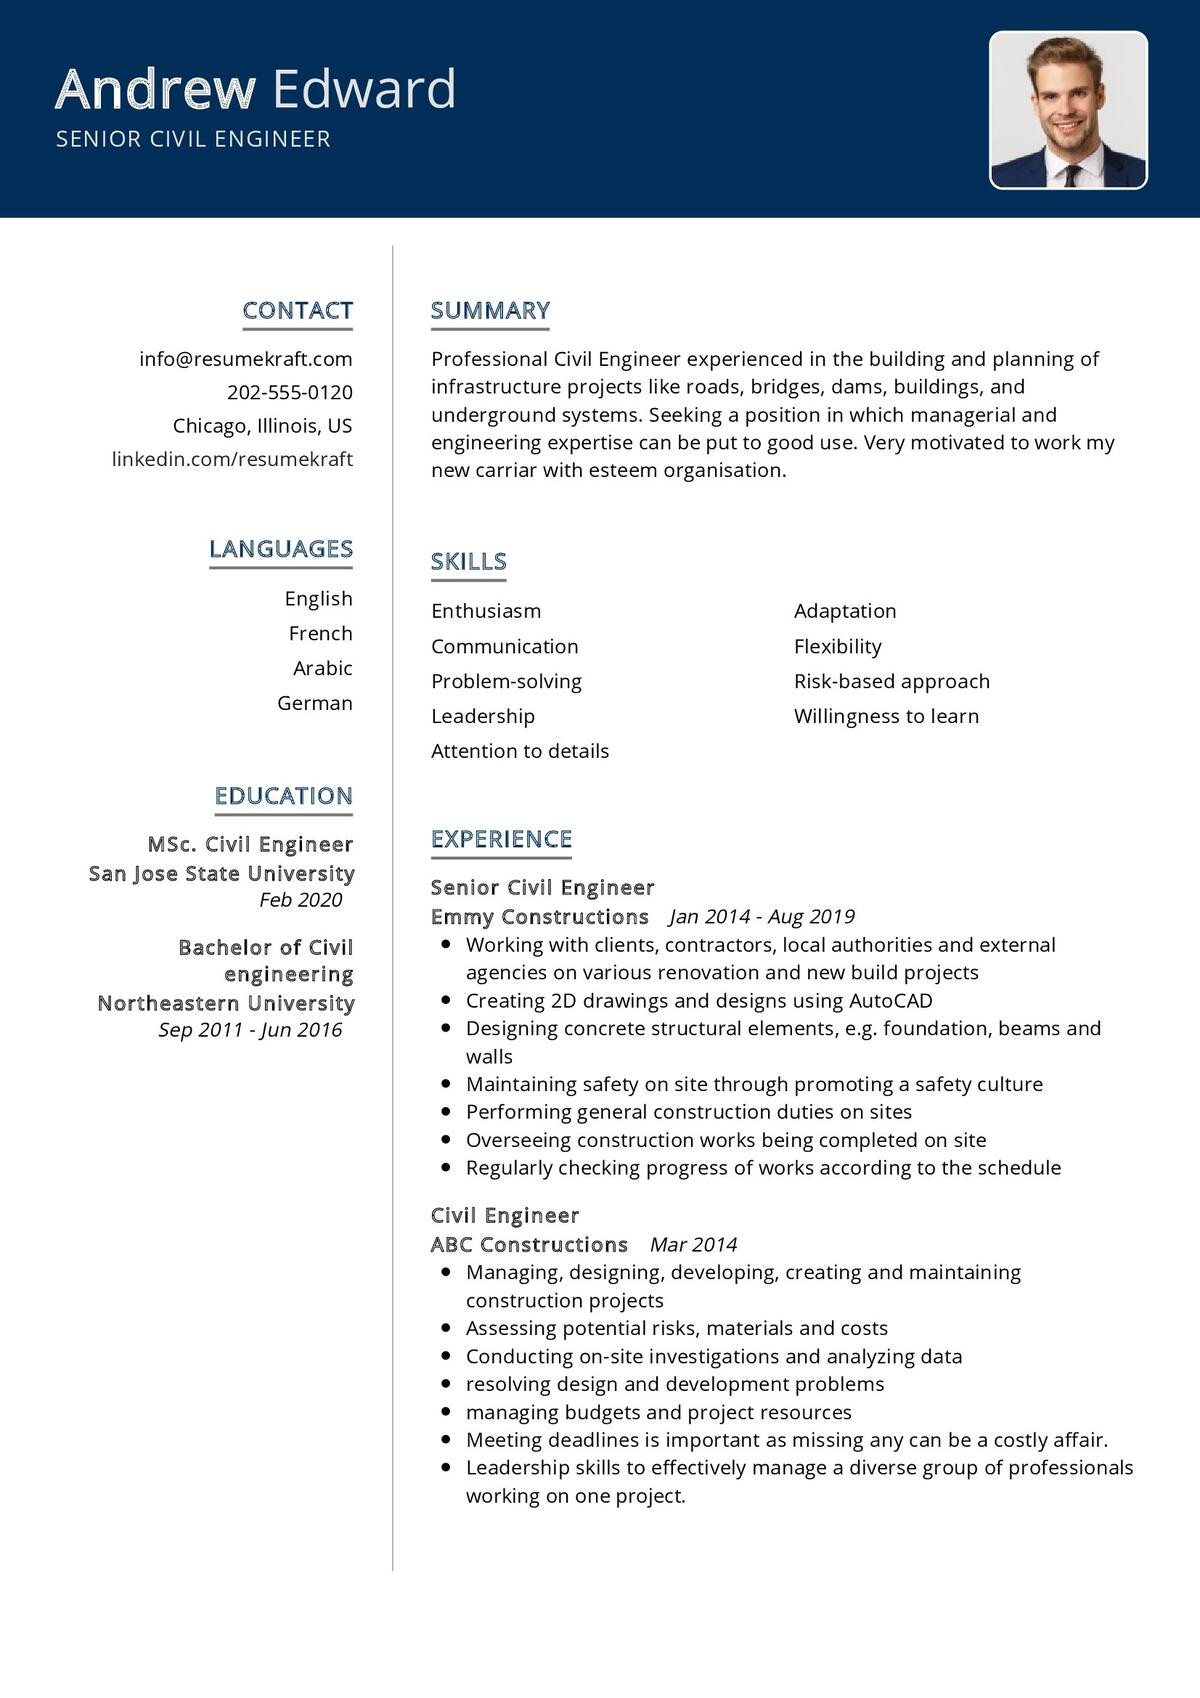 Resume Samples for Experienced Engineering Professionals Senior Civil Engineer Resume Sample 2021 Writing Guide – Resumekraft